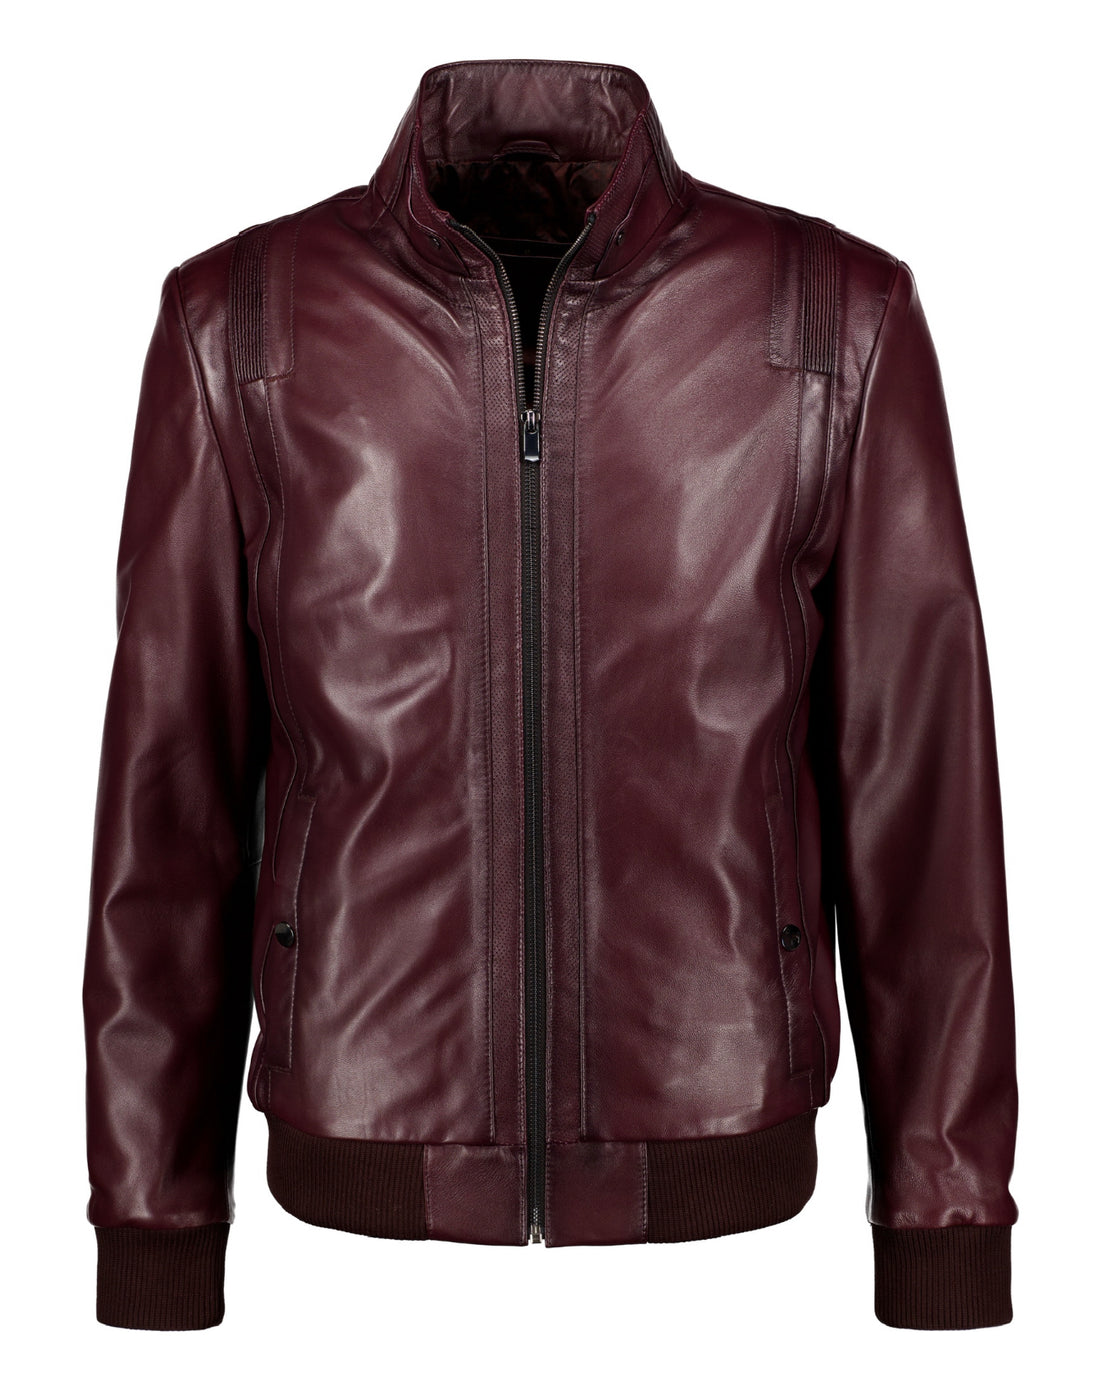 Lambskin Leather Biker Jacket - Burgundy - Leather Jacket by Urbbana